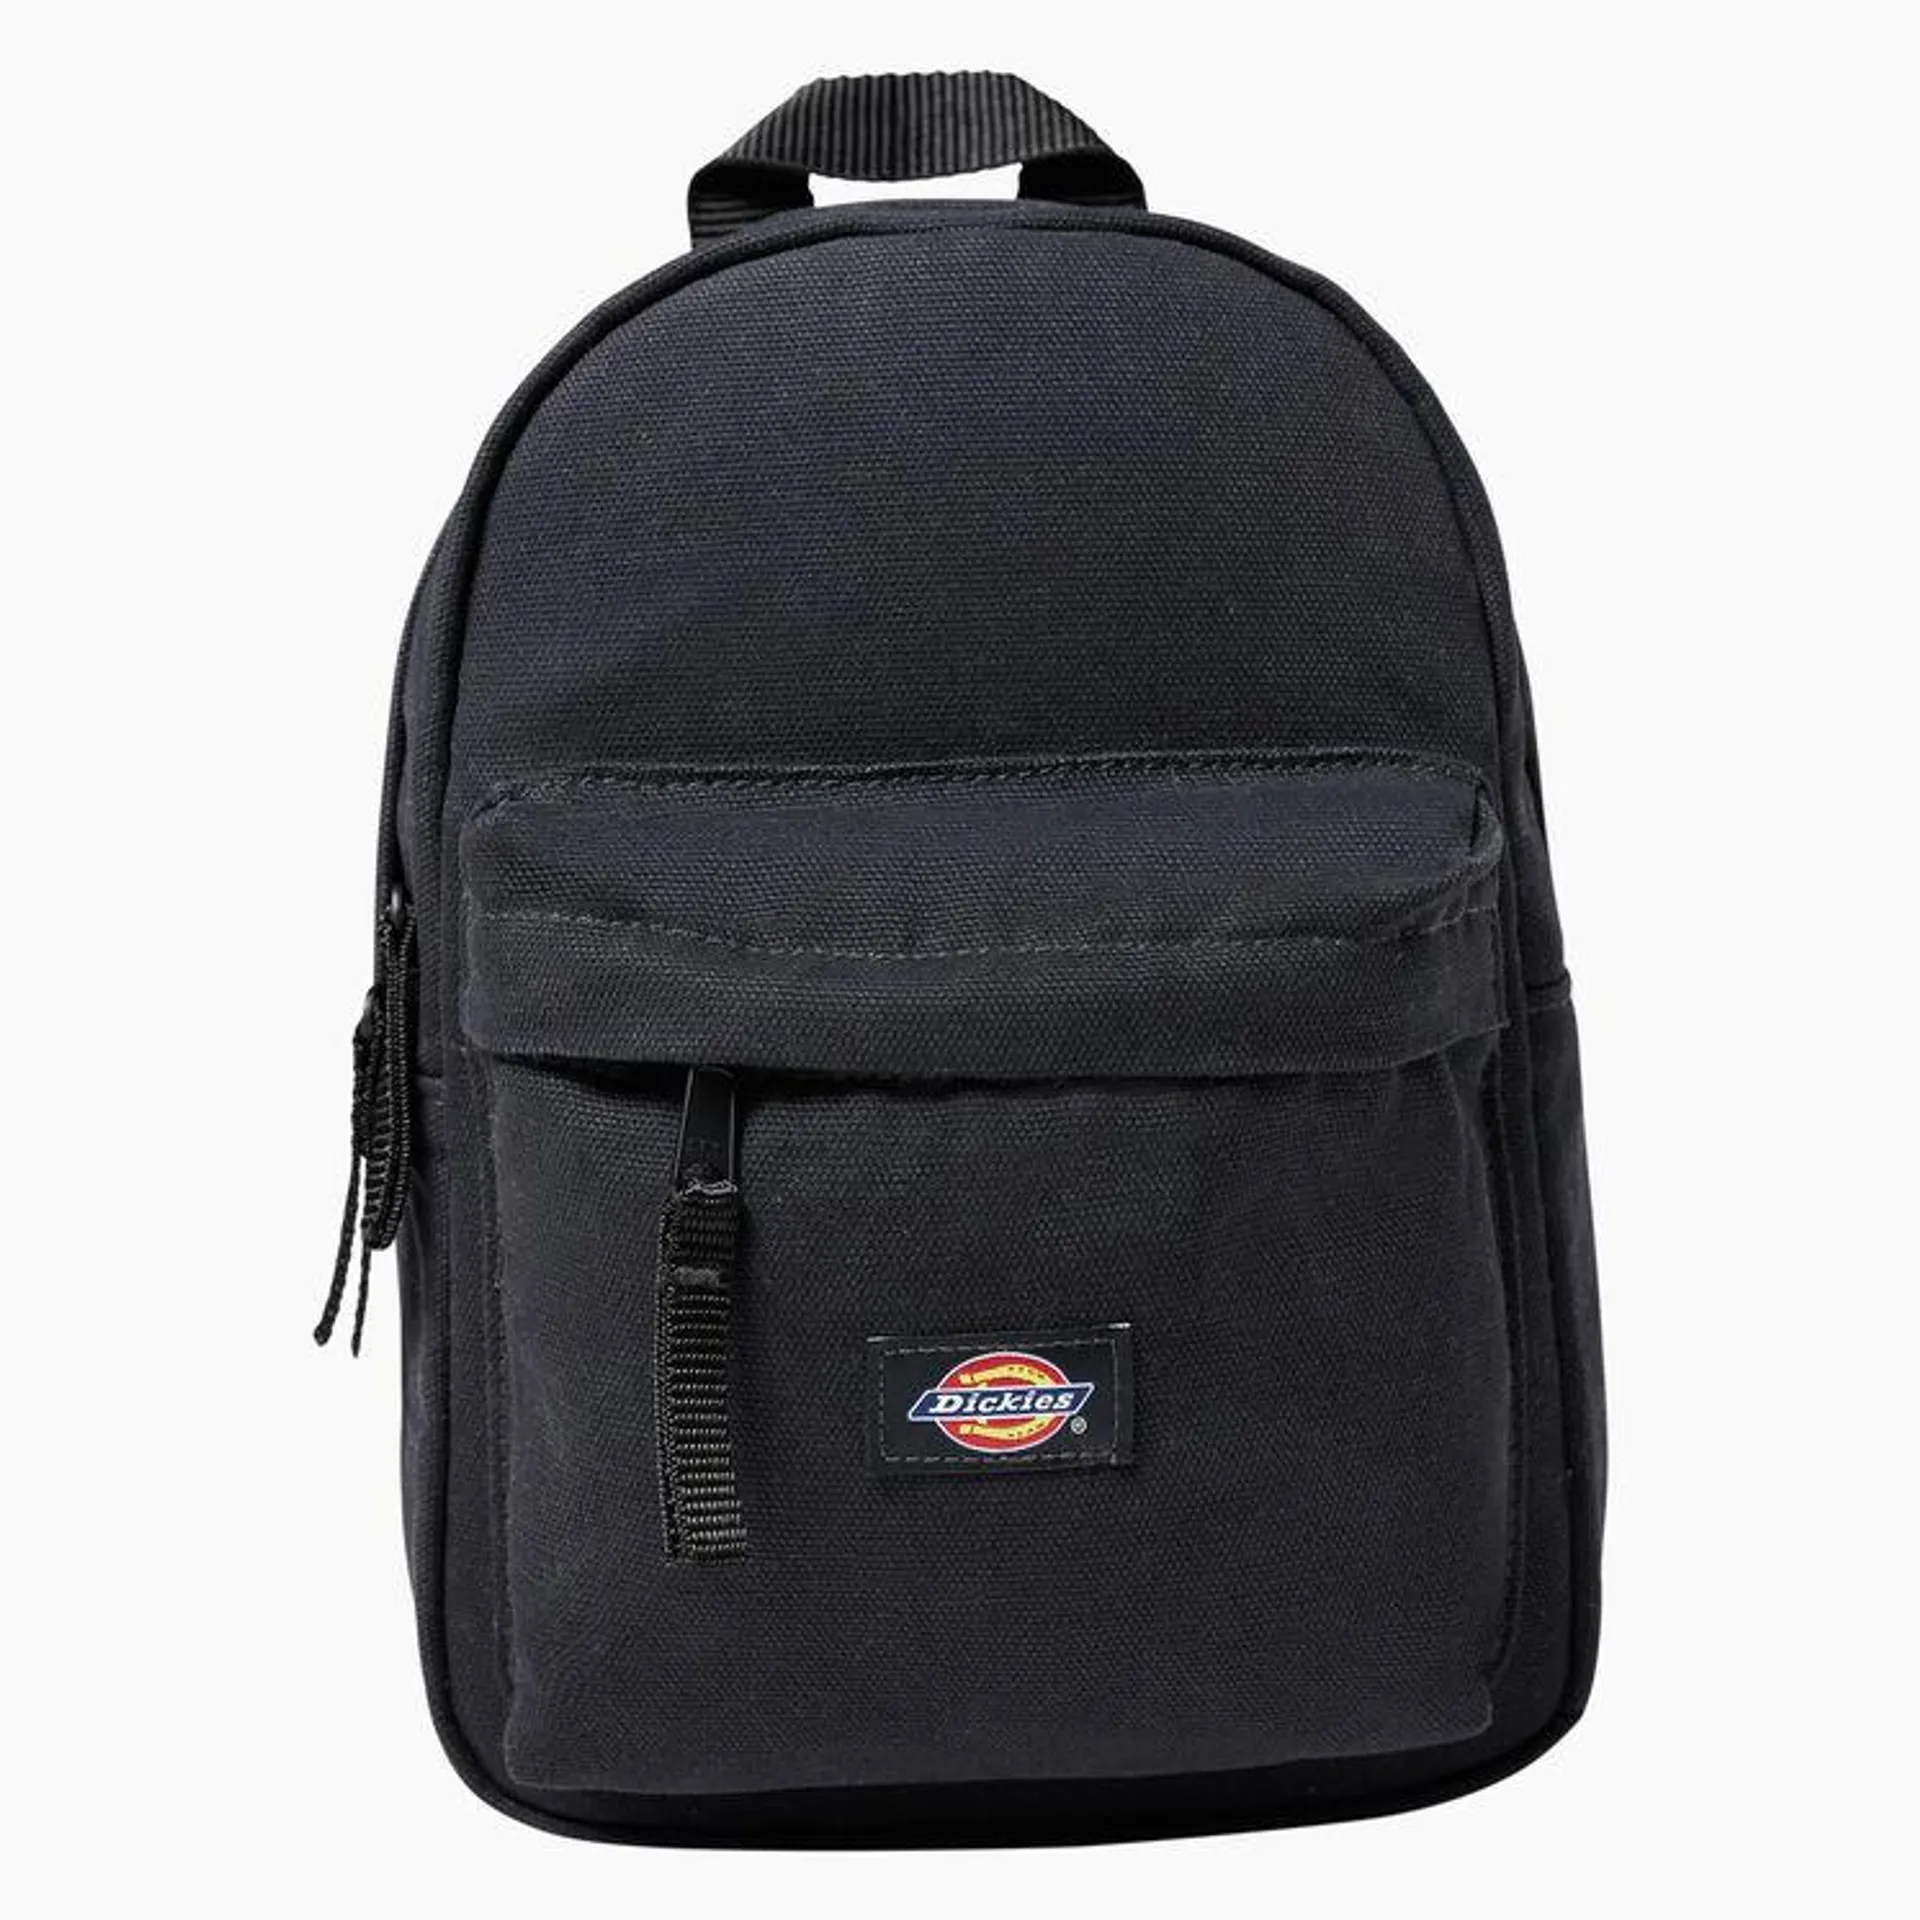 Duck Canvas Mini Backpack, Black